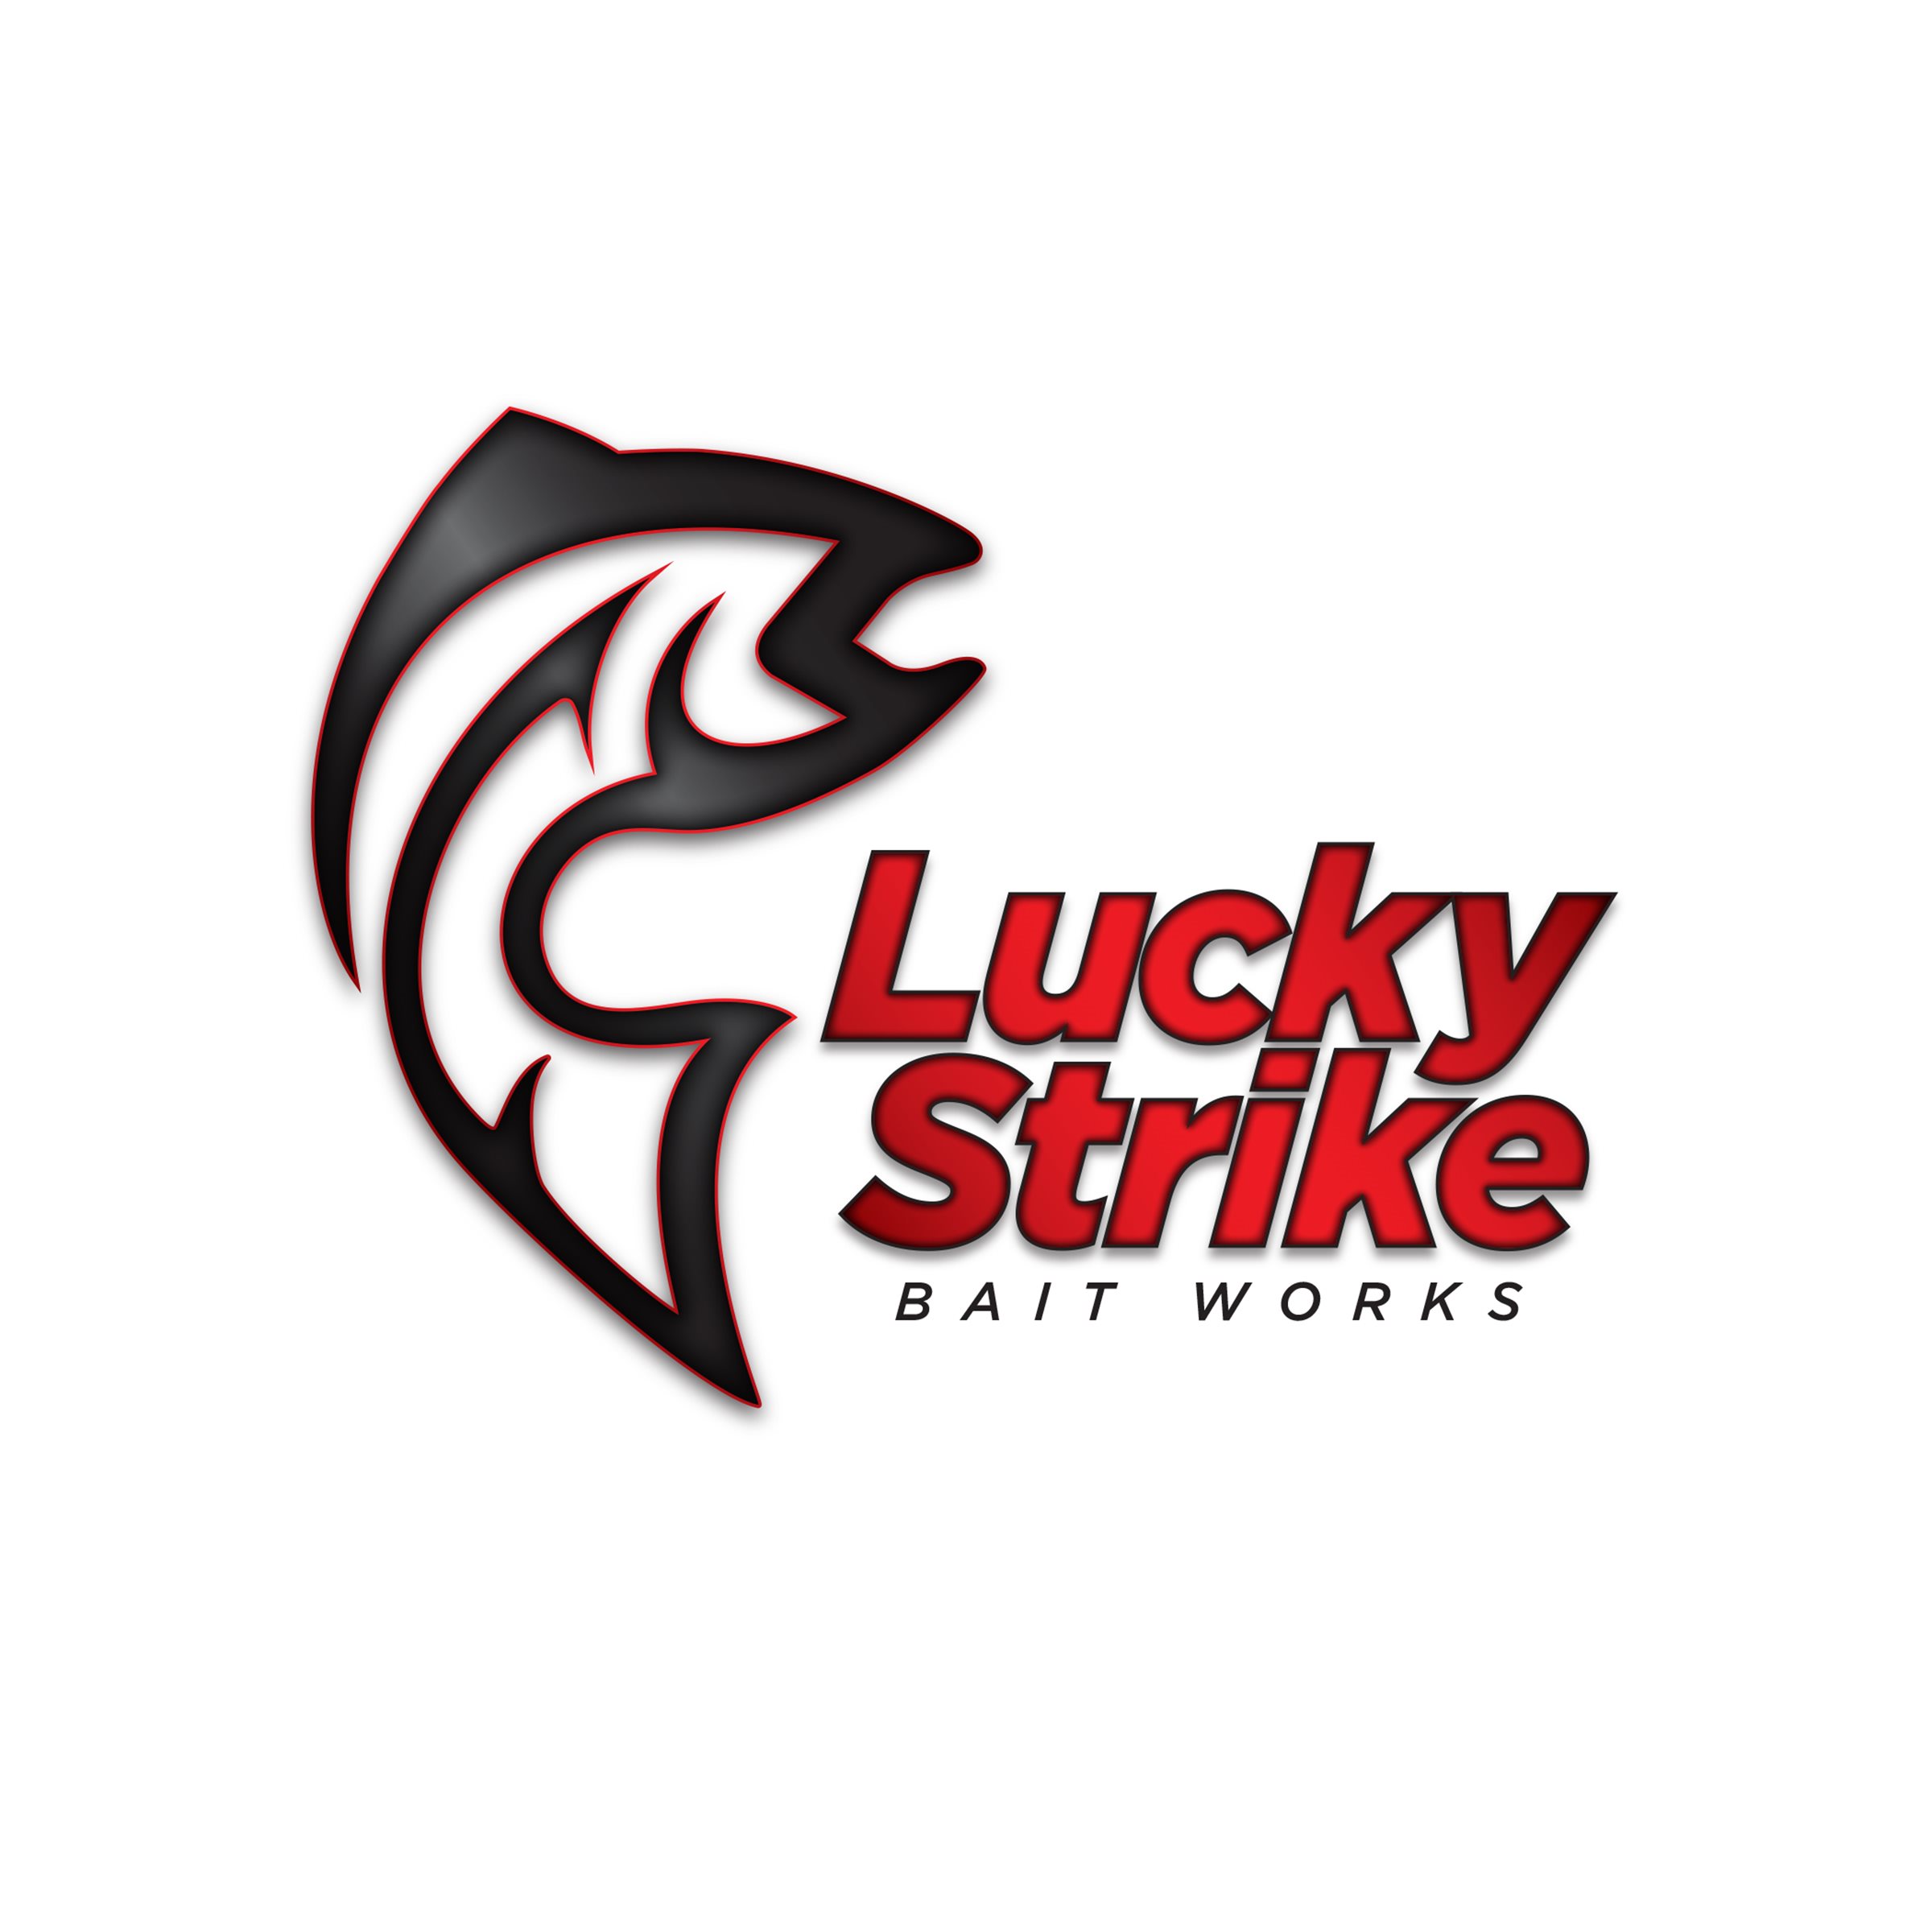 925-Lucky Strike